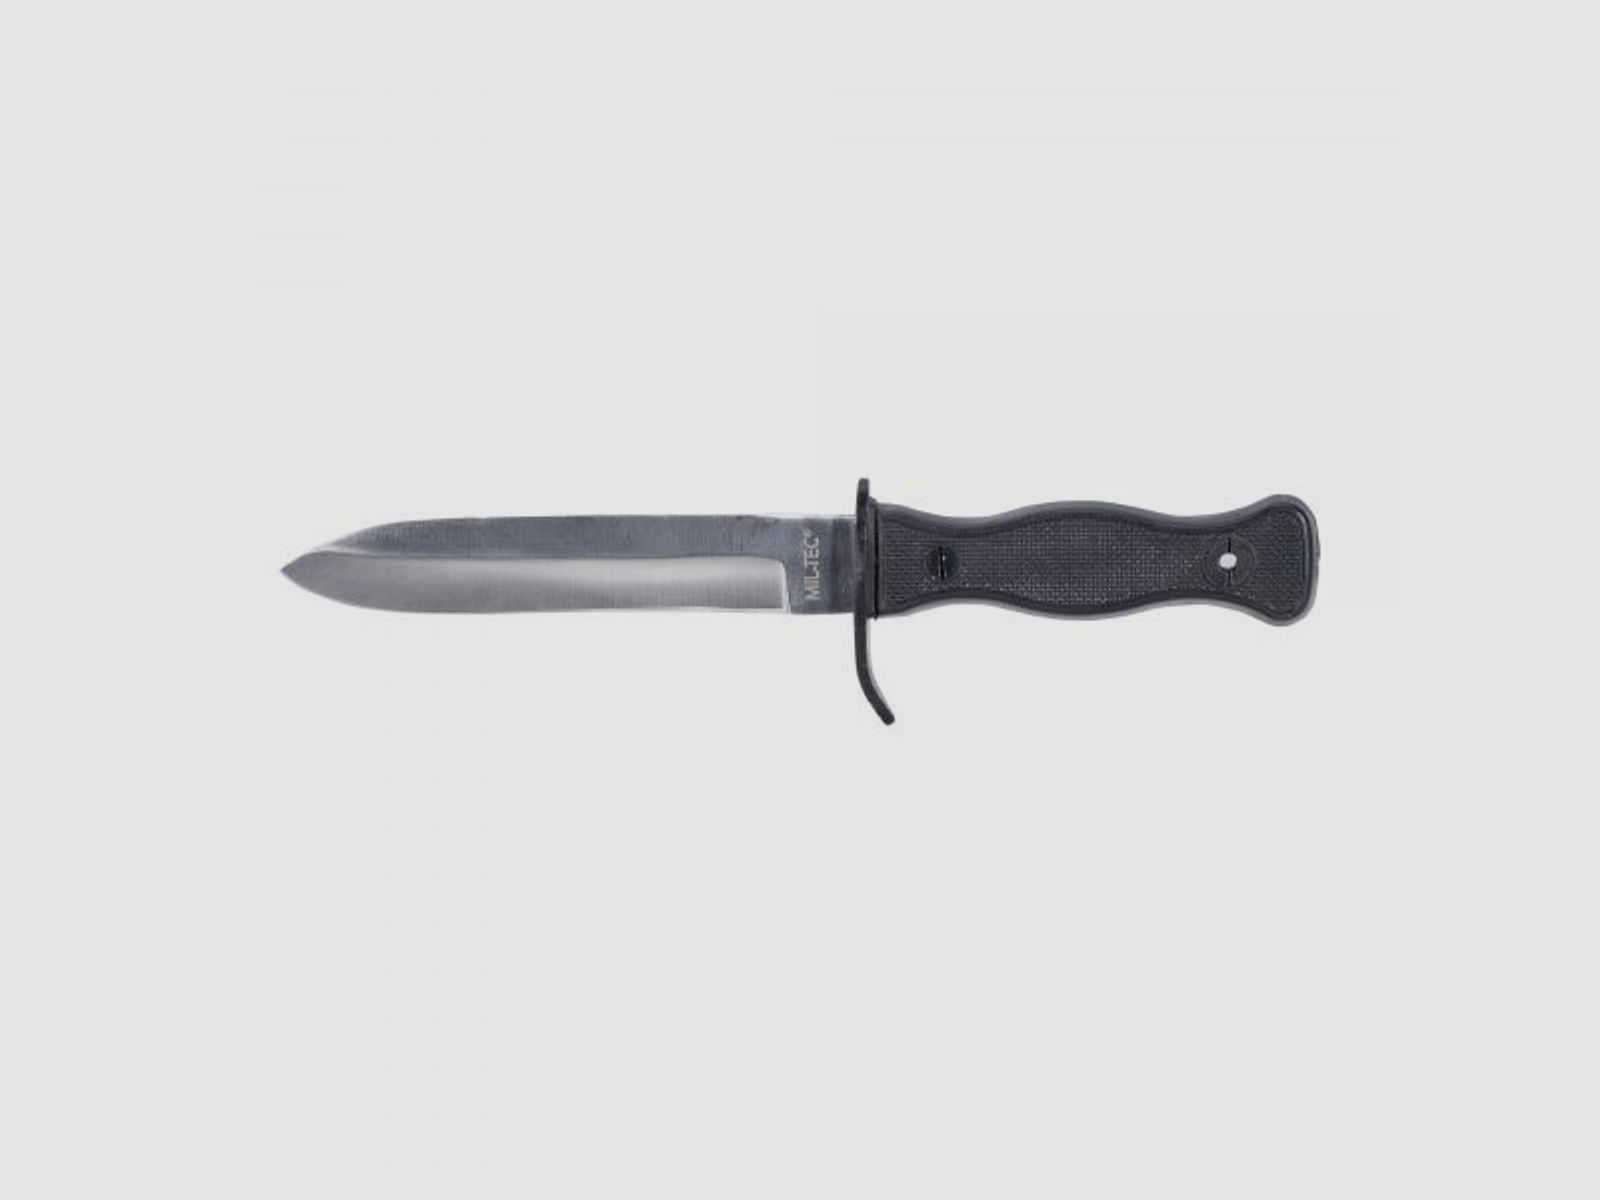 Mil-Tec Mil-Tec BW Kampfmesser zerlegbar schwarz